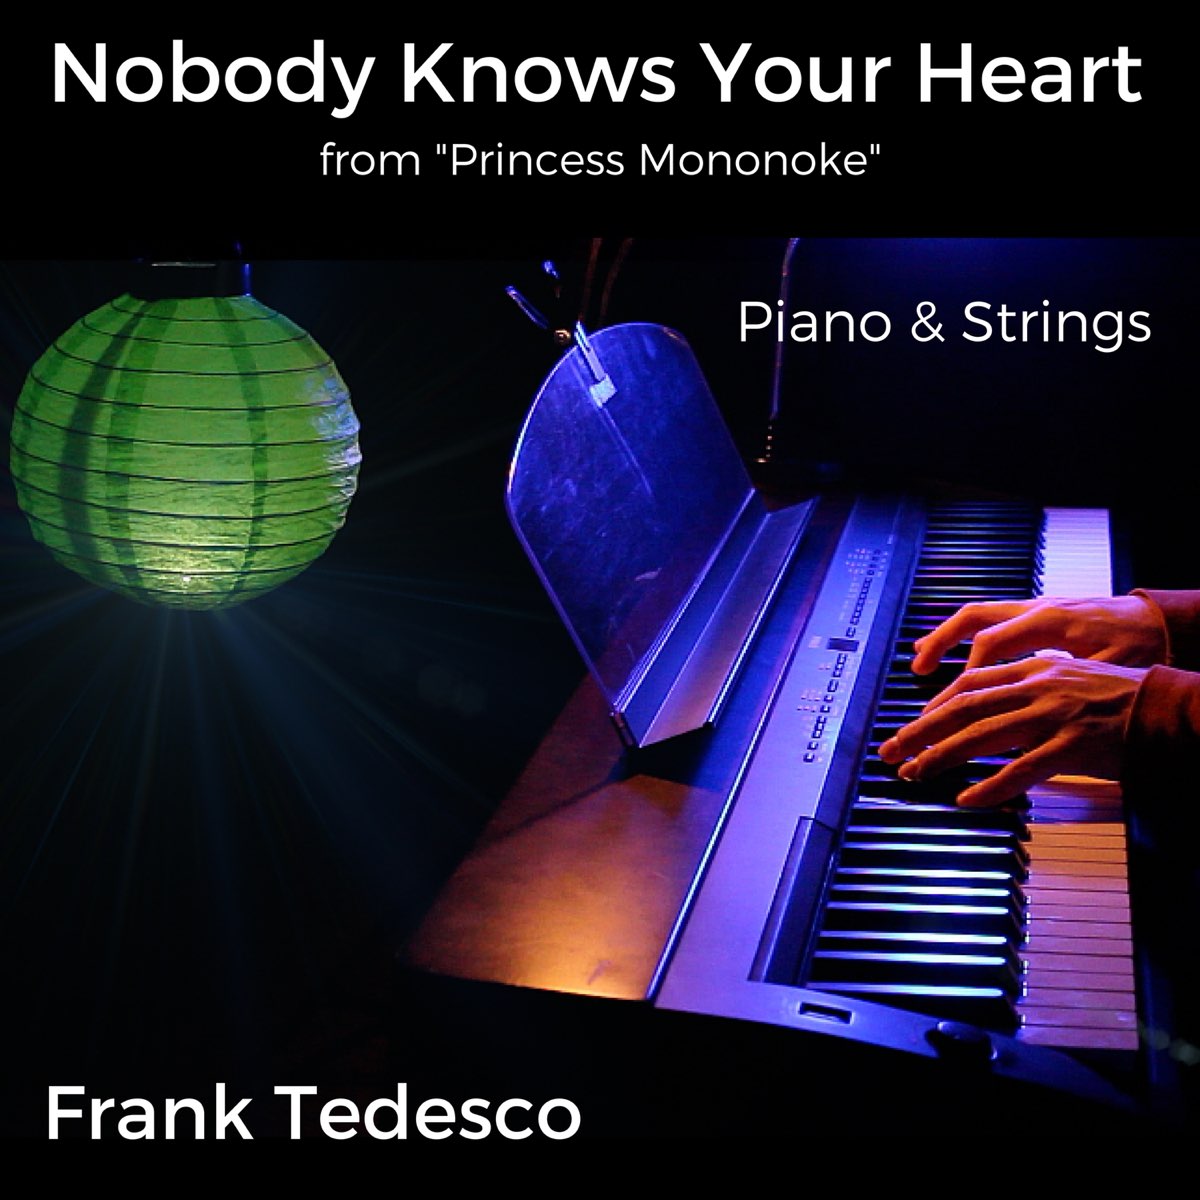 Nobody Knows Your Heart (From "Princess Mononoke") [Piano & Strings] -  Single - Album by Frank Tedesco - Apple Music